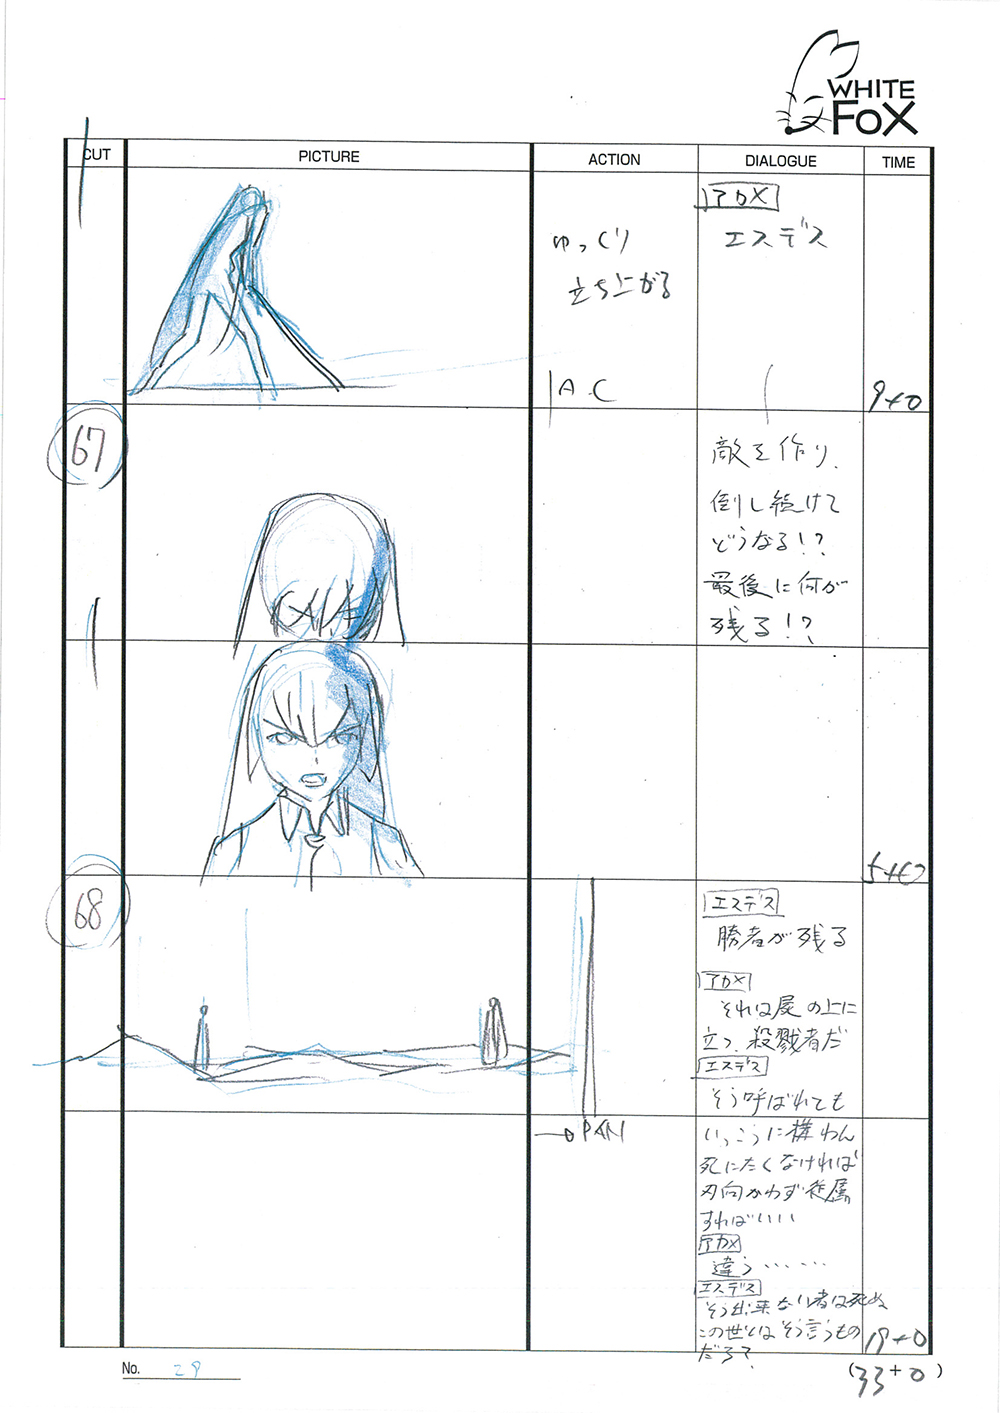 Akame ga Kill Episode 24 Storyboard Leak 031